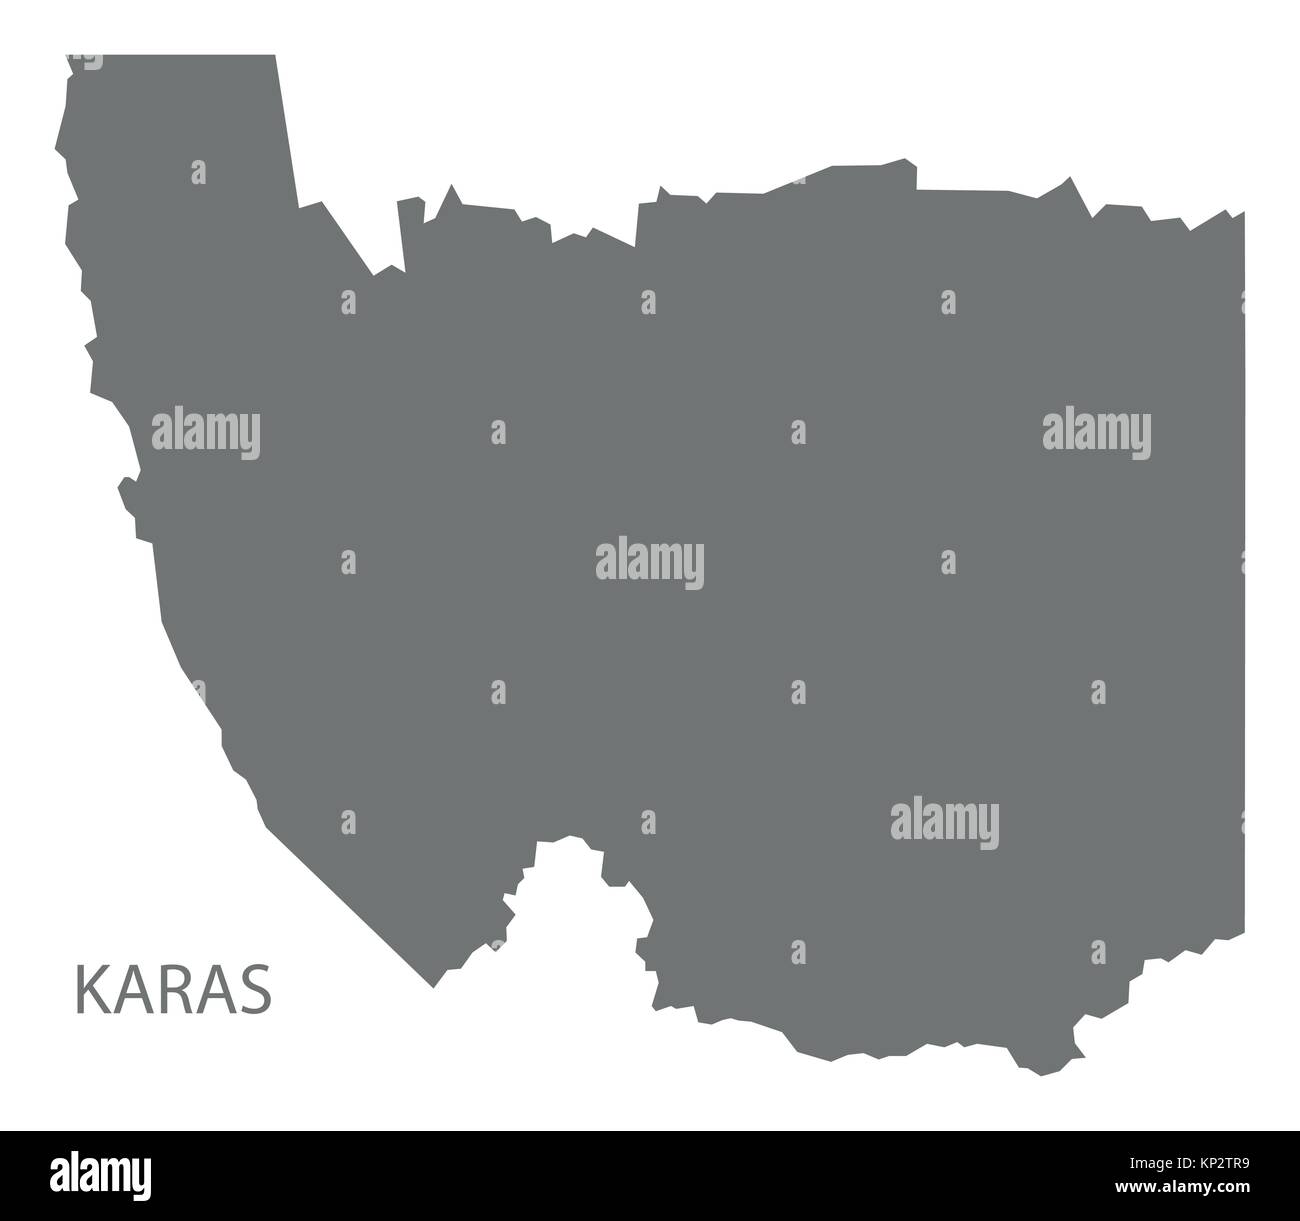 Karas Karte von Namibia Grau Abbildung silhouette Form Stock Vektor